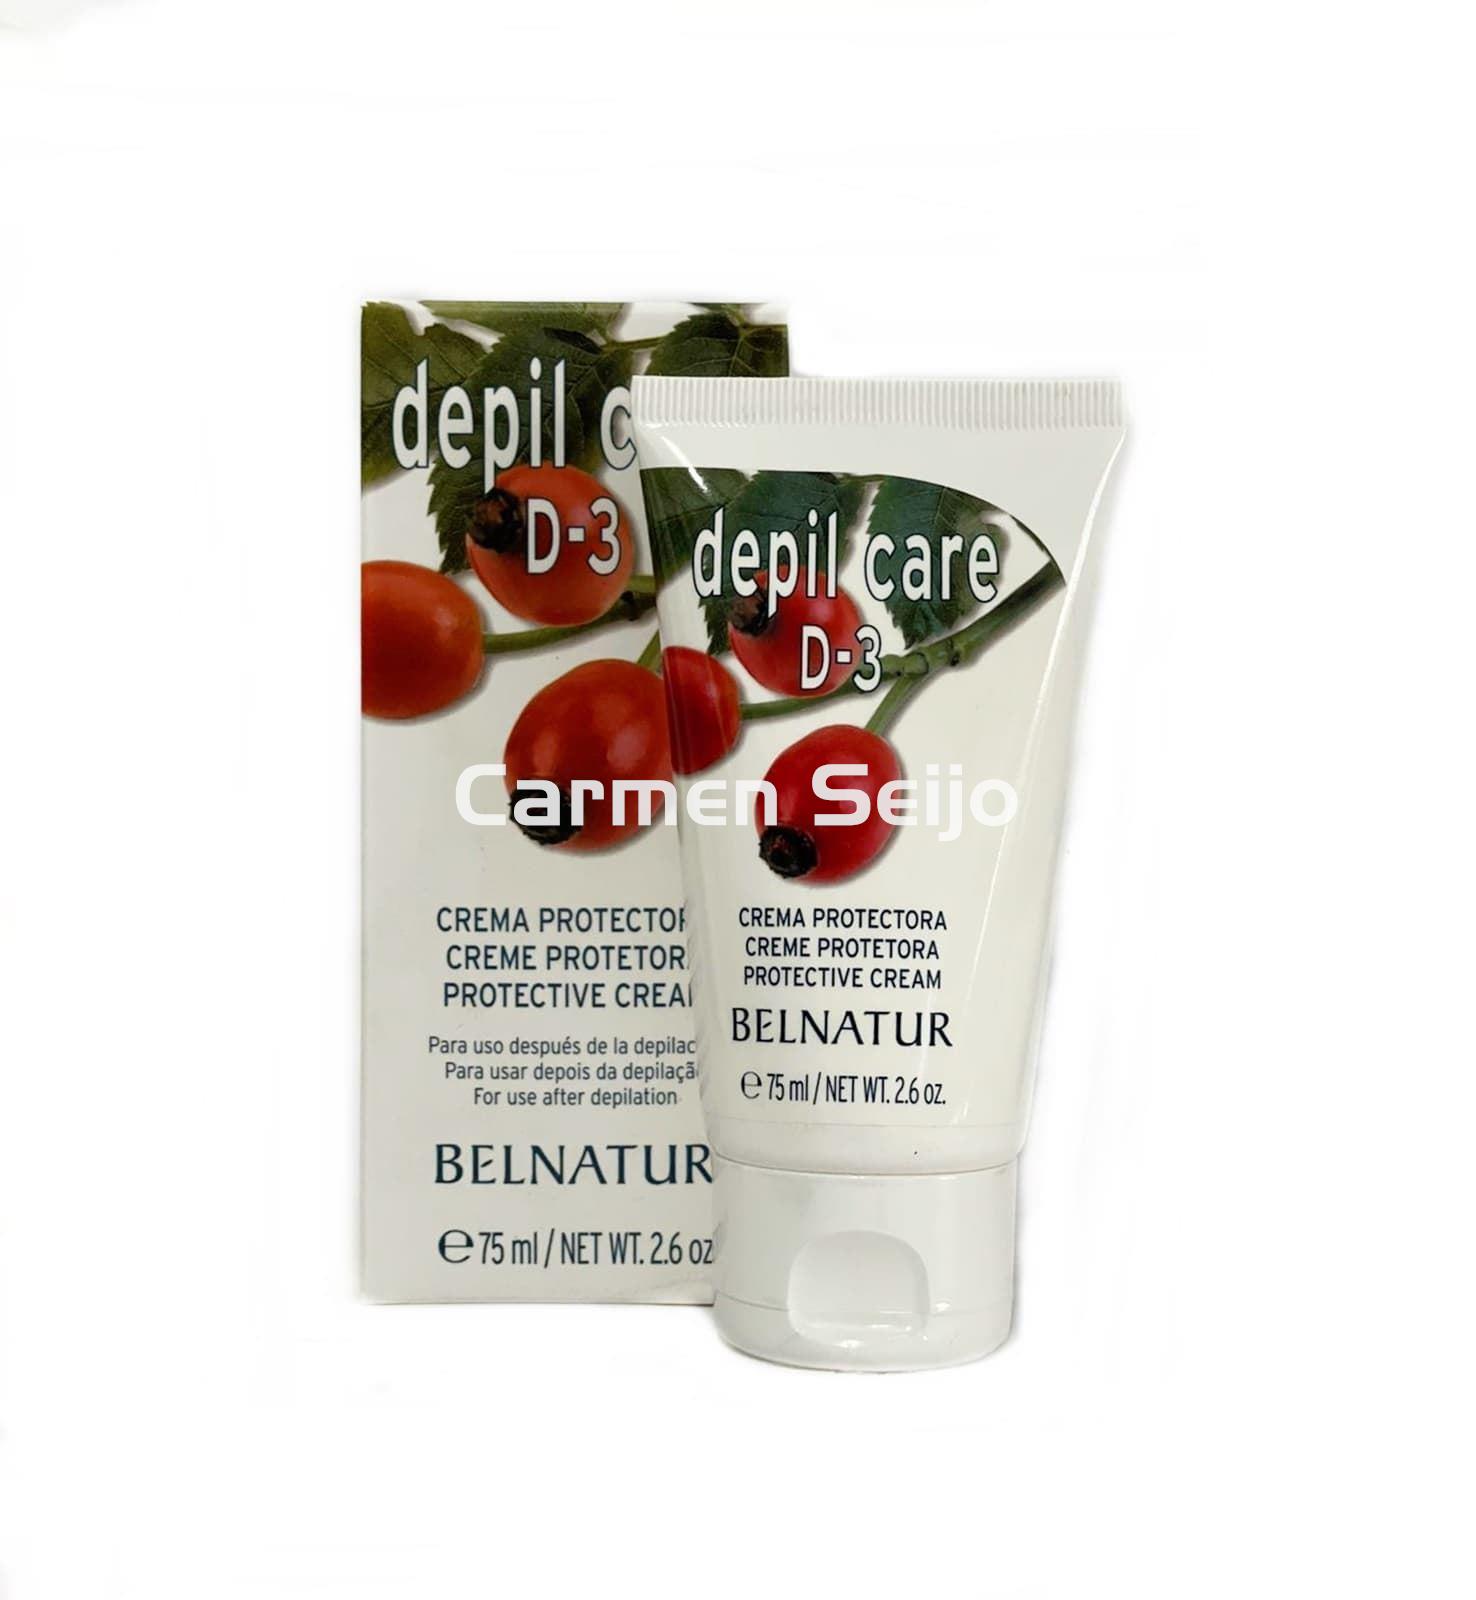 Belnatur Crema Protectora D-3 Depil Care - Imagen 1